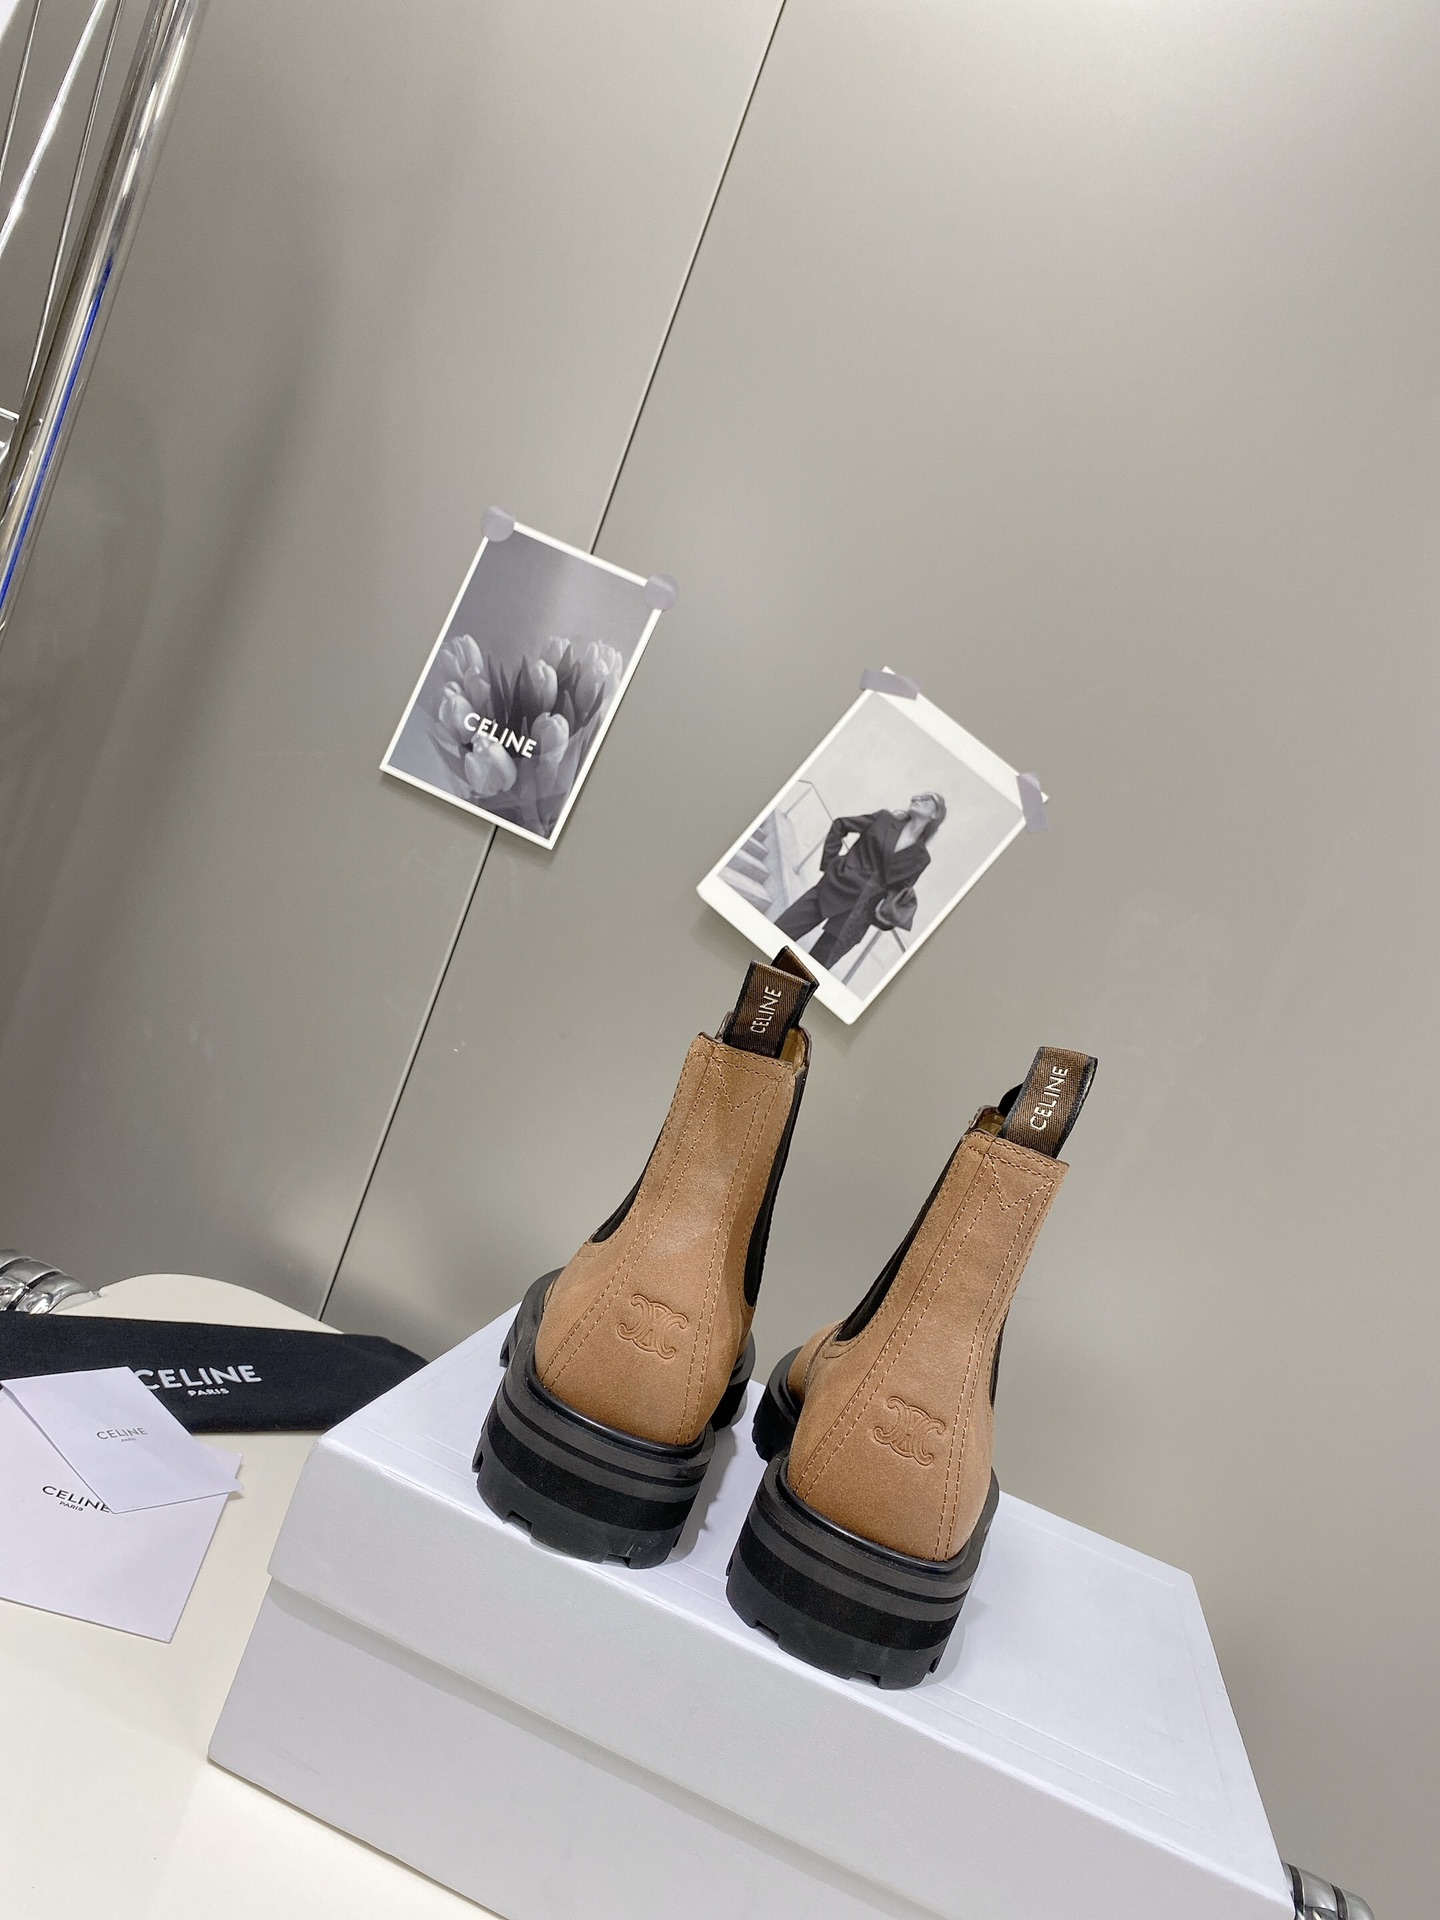 celine赛琳秋冬最新走秀款lisa同款短靴低调简约的设计上C家LOGO点缀极具品牌辨识度上脚显瘦轻便